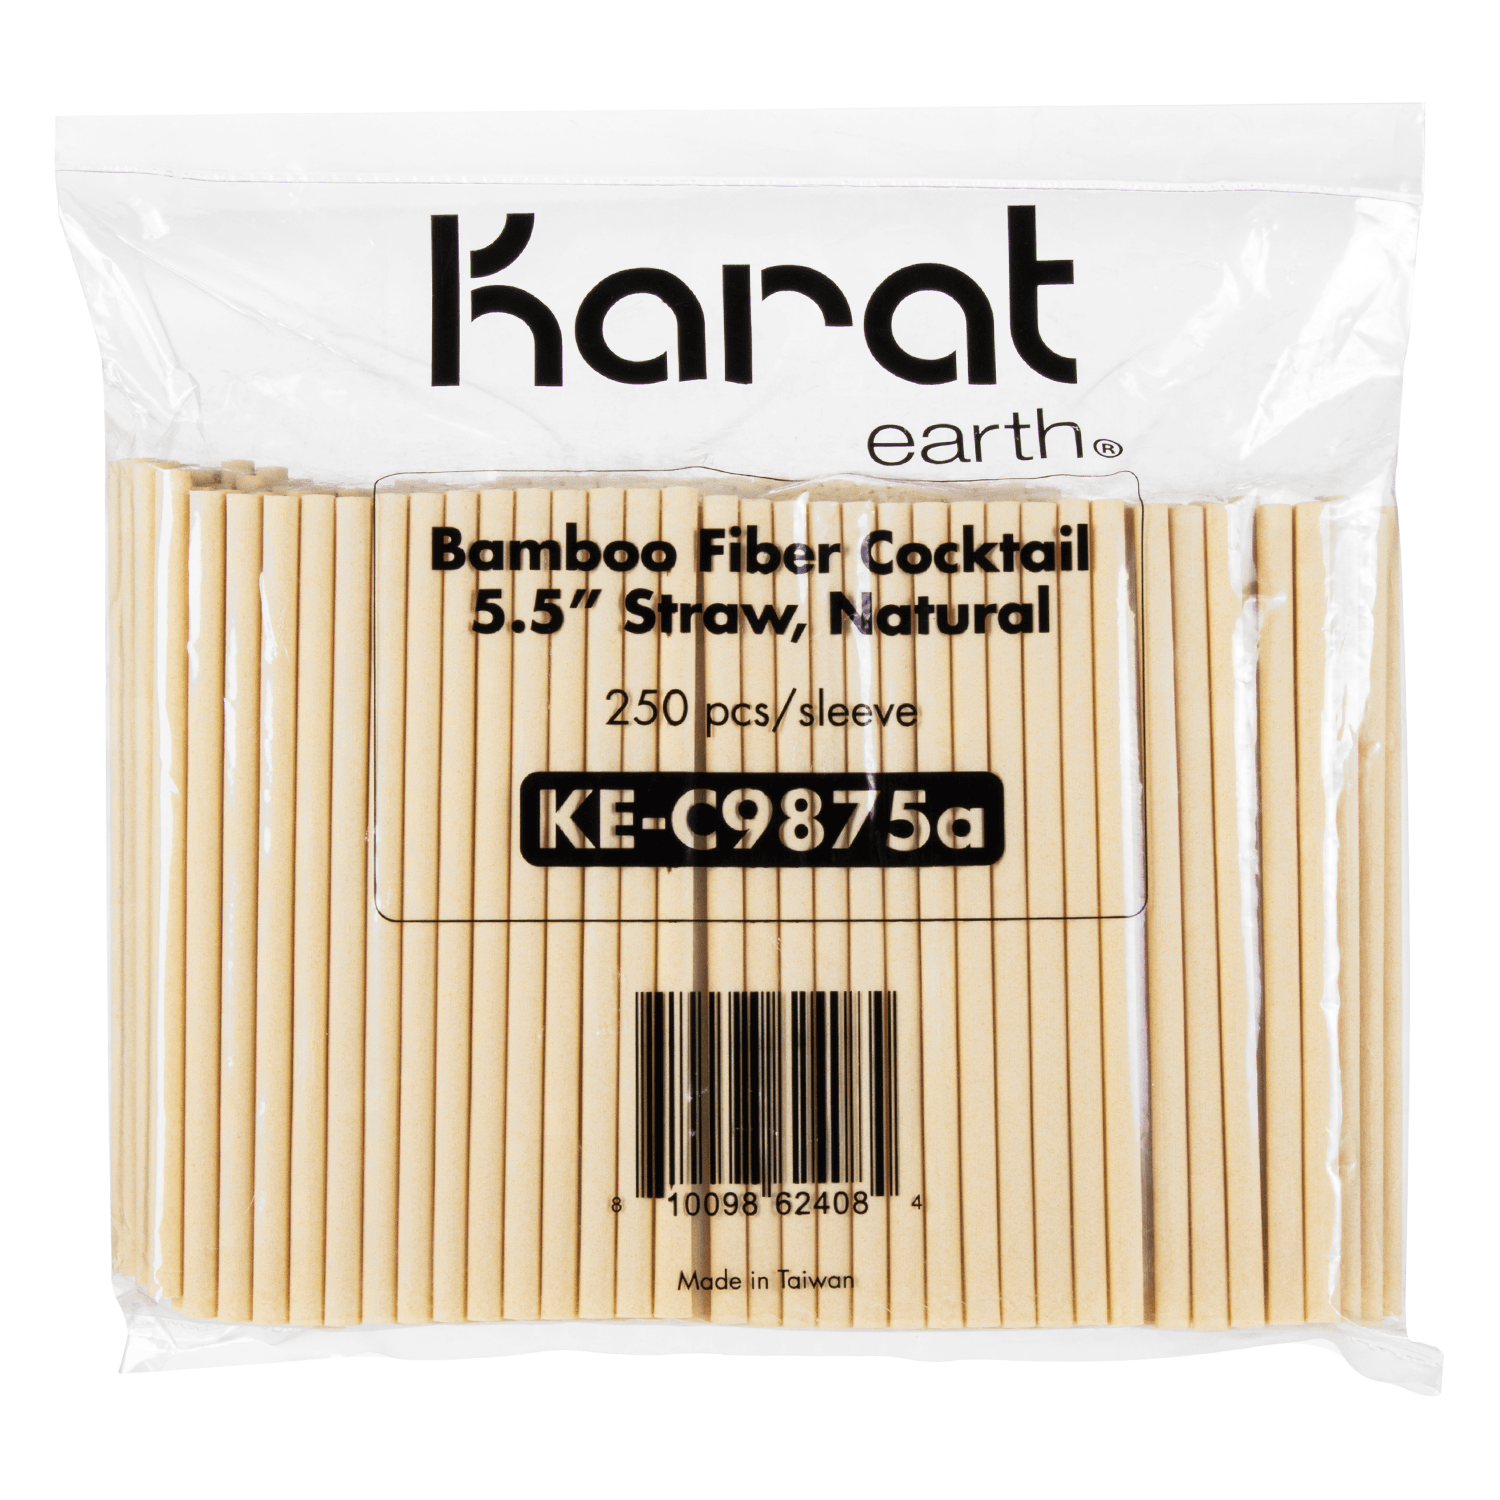 Karat Earth Bamboo Fiber Cocktail 5.5'' Straws (6mm), Natural - Bag of 250 pcs